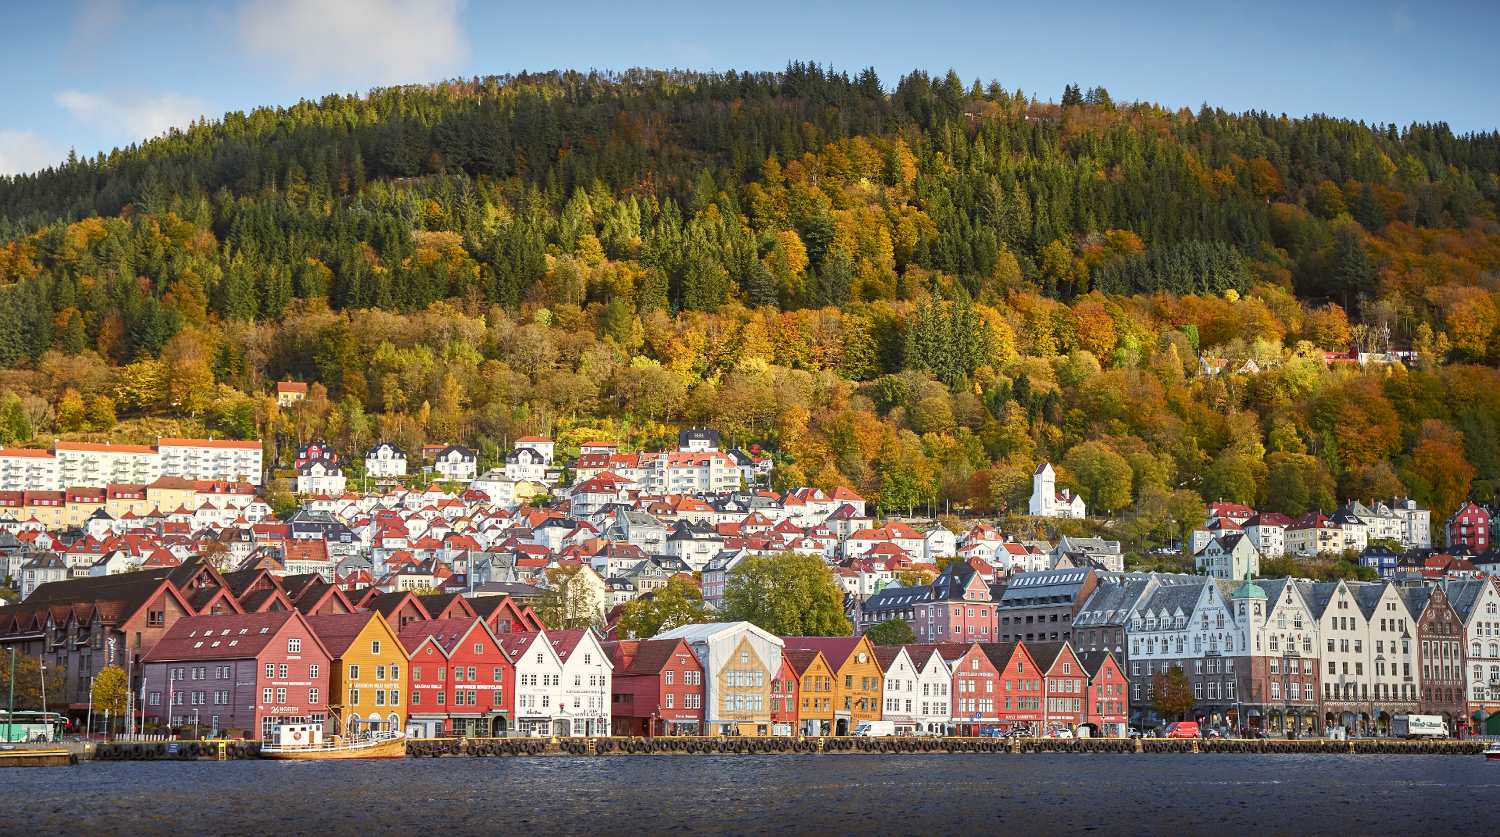 Top 5 things to do in Bergen - Bryggen